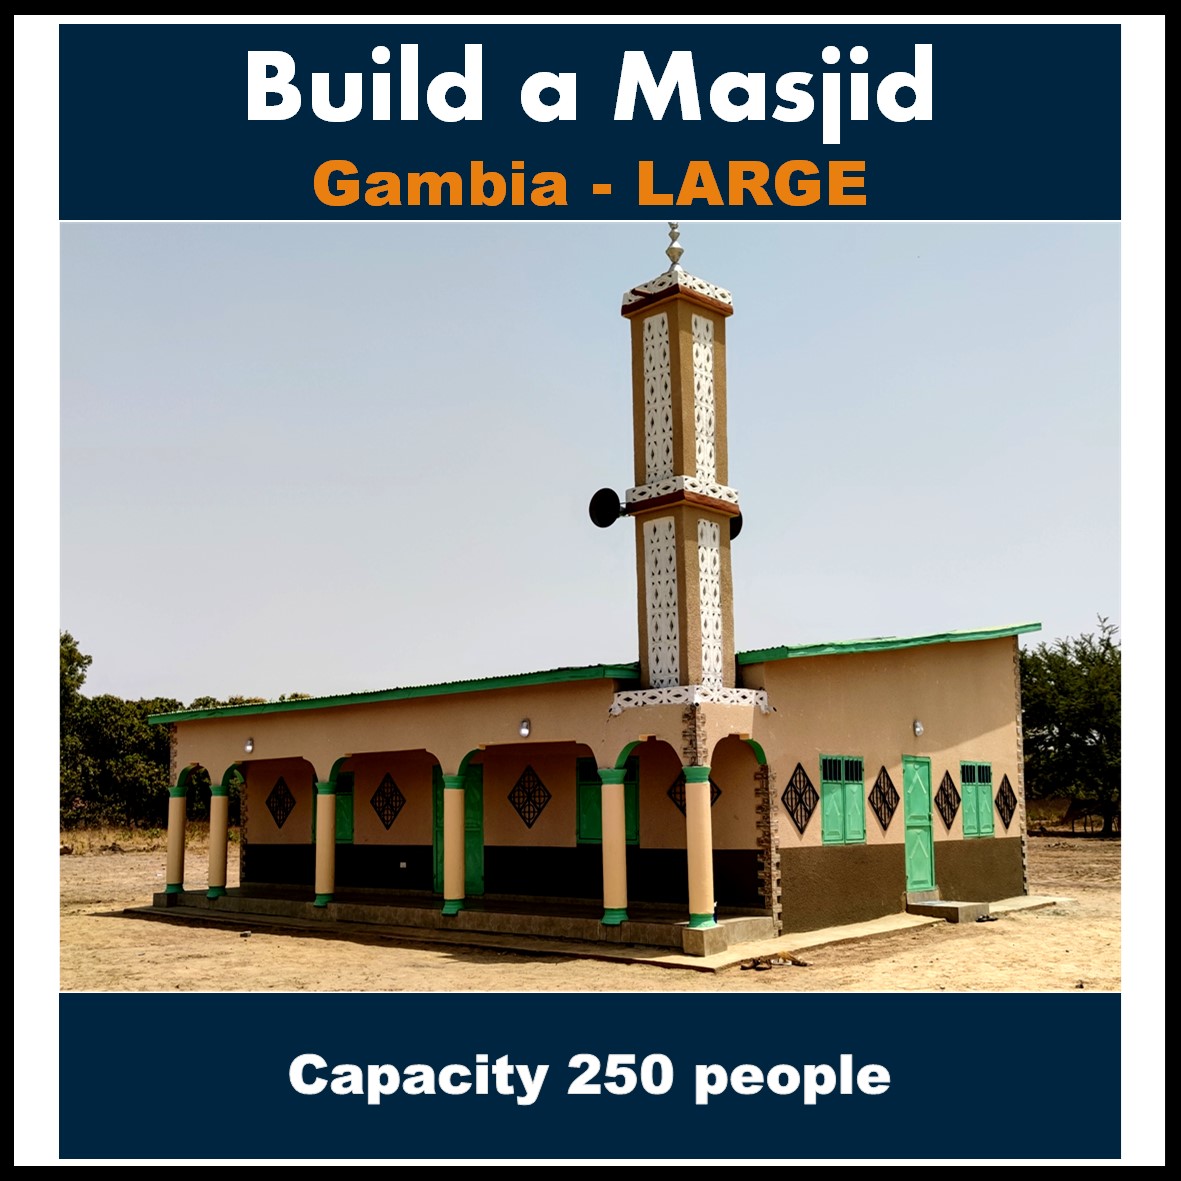 Masjid - Large